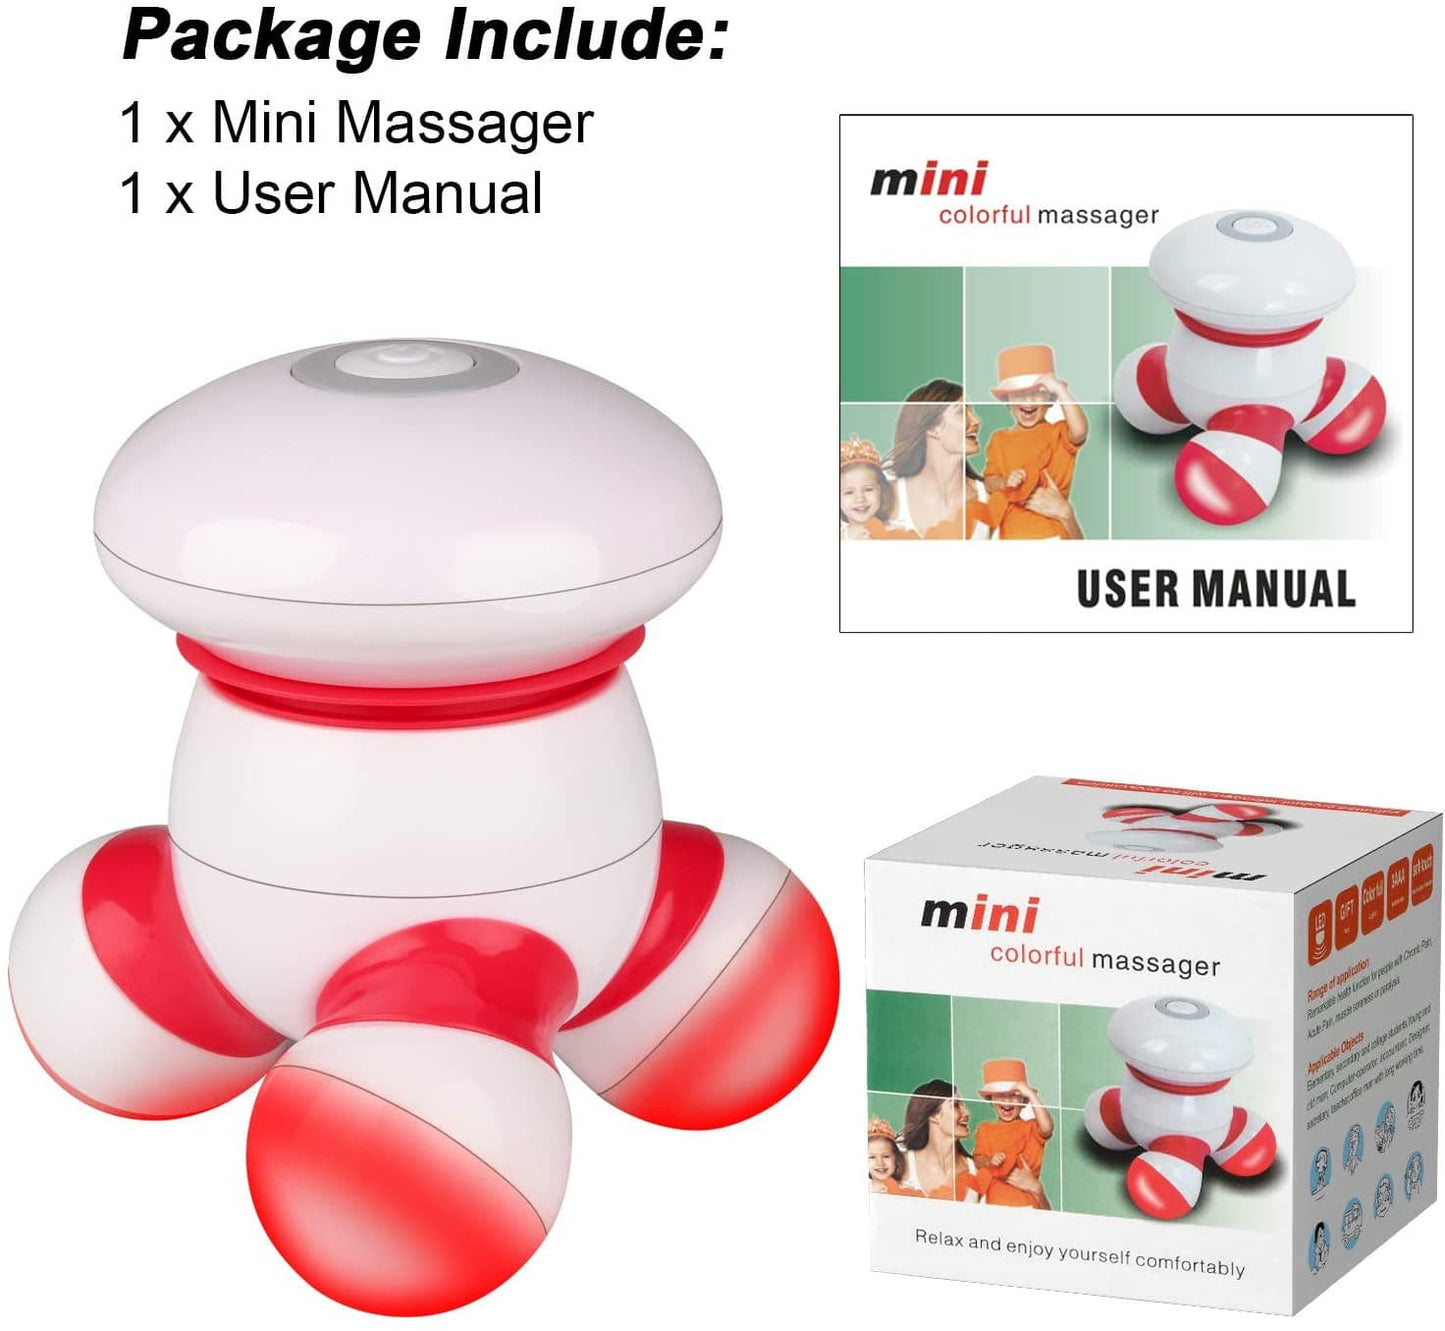 Cotsoco Handheld Massager Mini Portable Vibrating Body Massager with LED Light